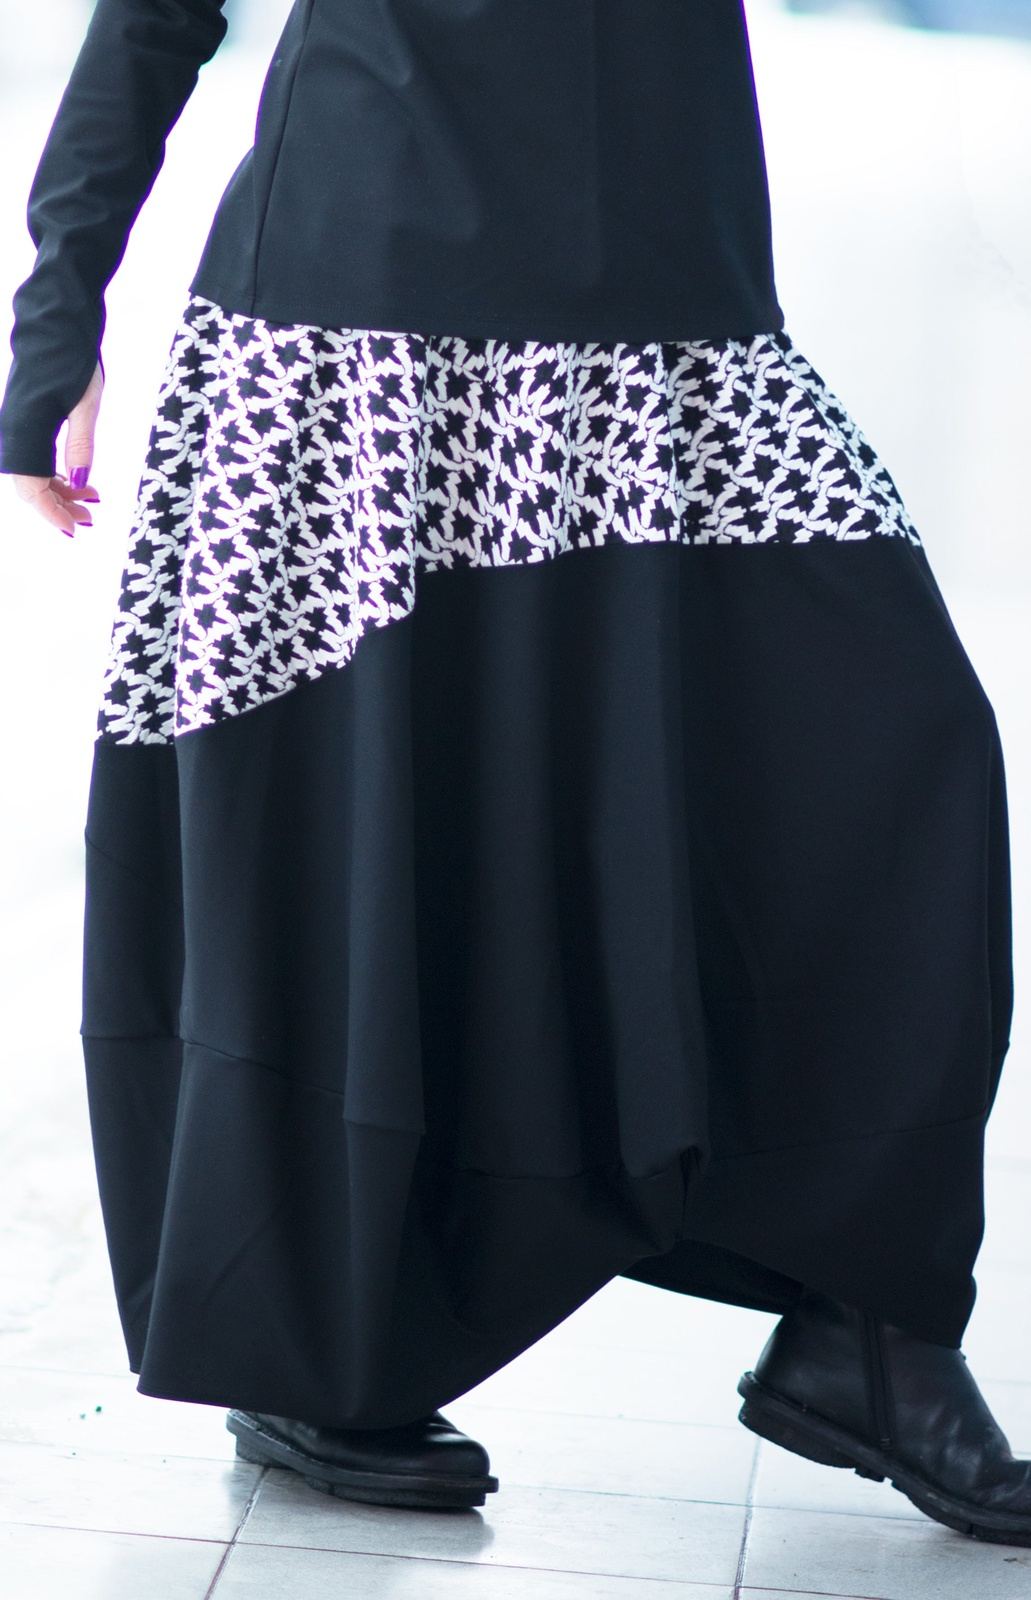 Black Shepherd's Plaid Cotton Skirt